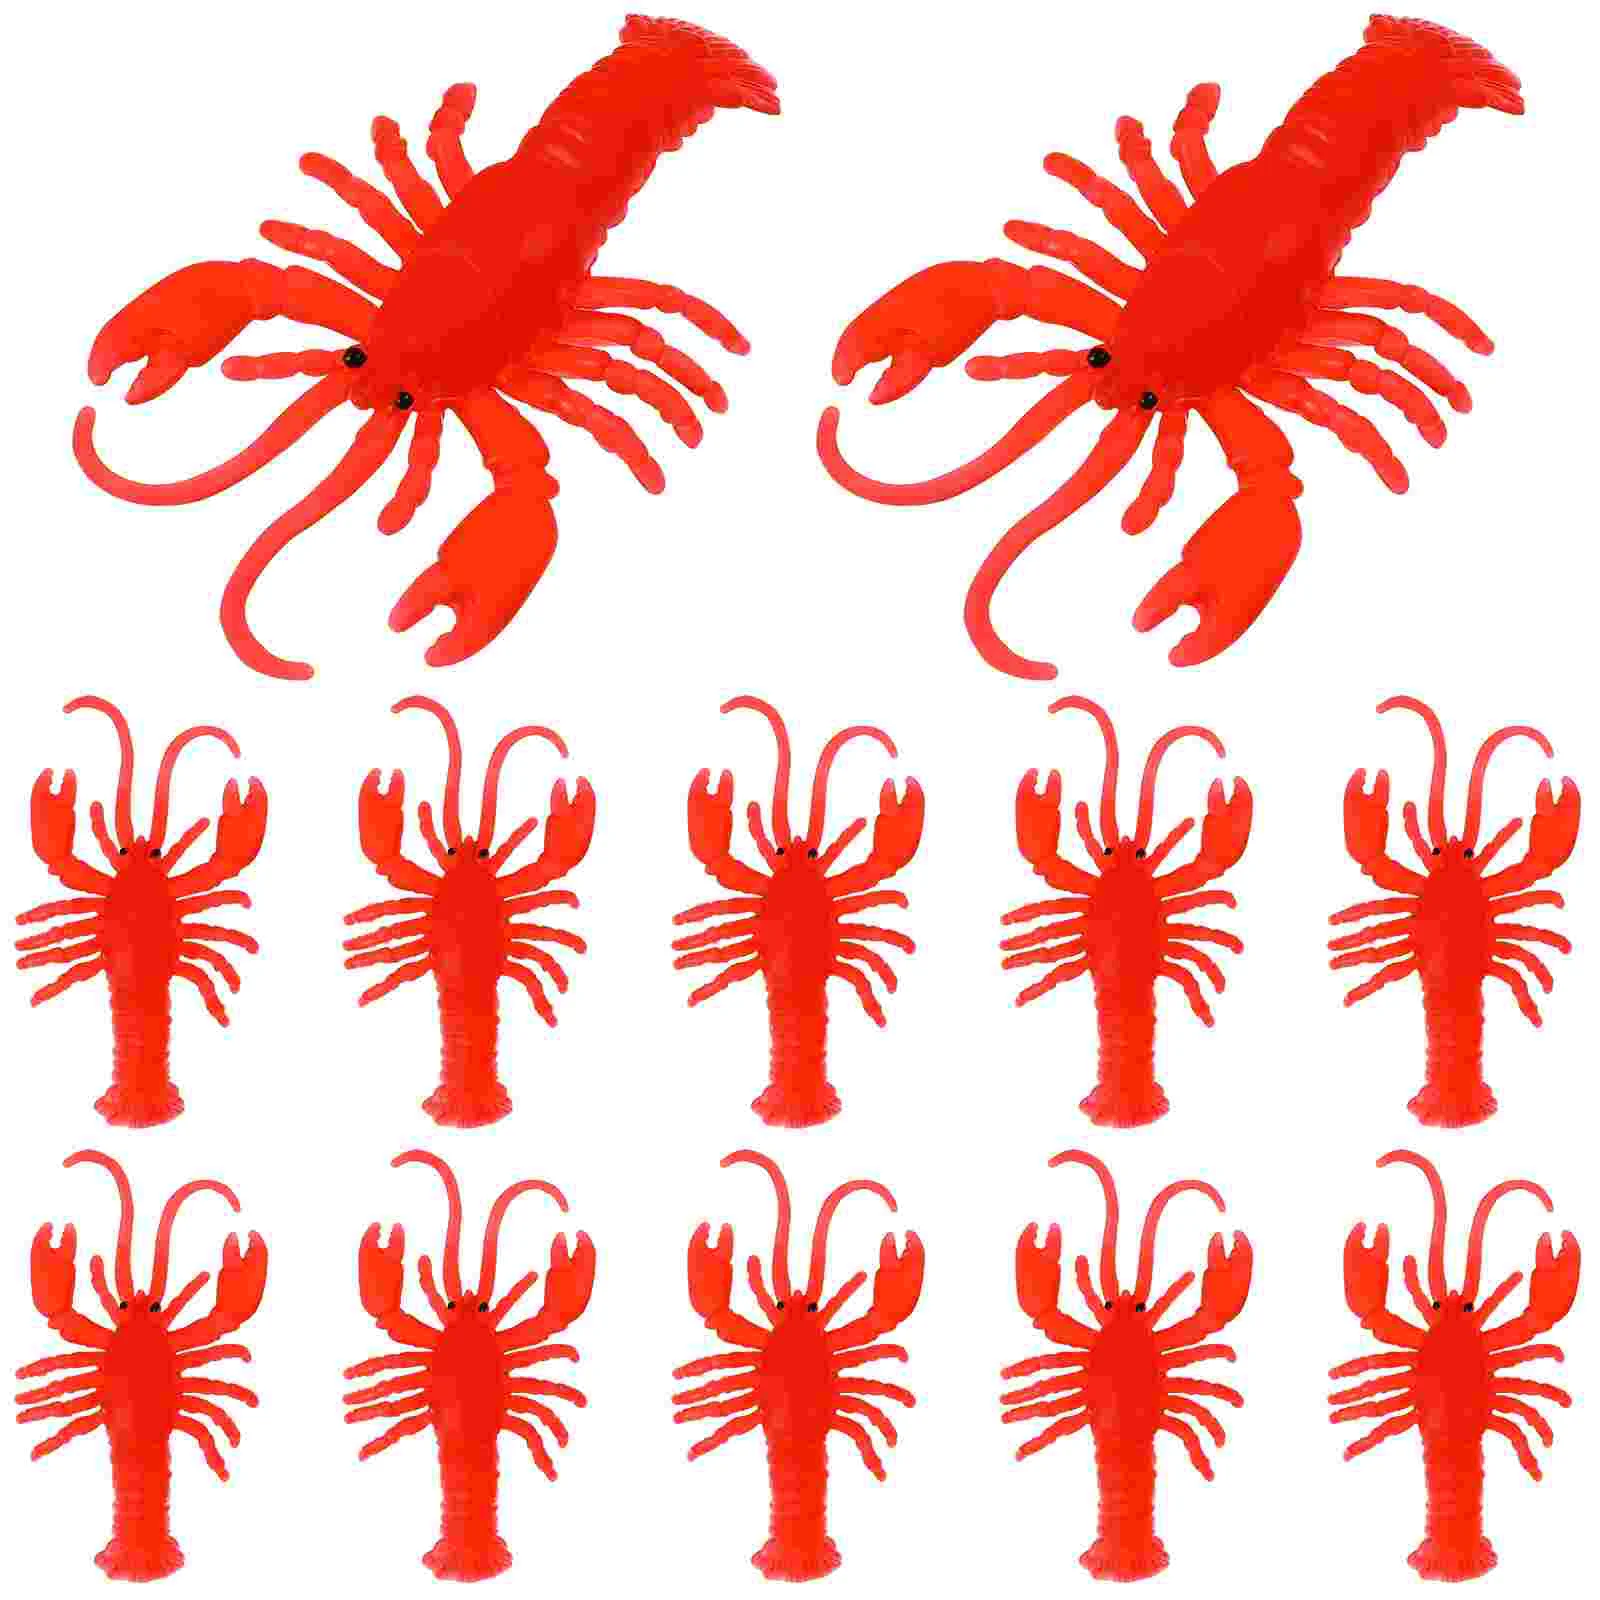 

12 Pcs Simulated Crayfish Lobster Toys Kids Soft Sea Animal Ornaments Plastic Grabber Marine Child Tpr Rubber Crawfish Models